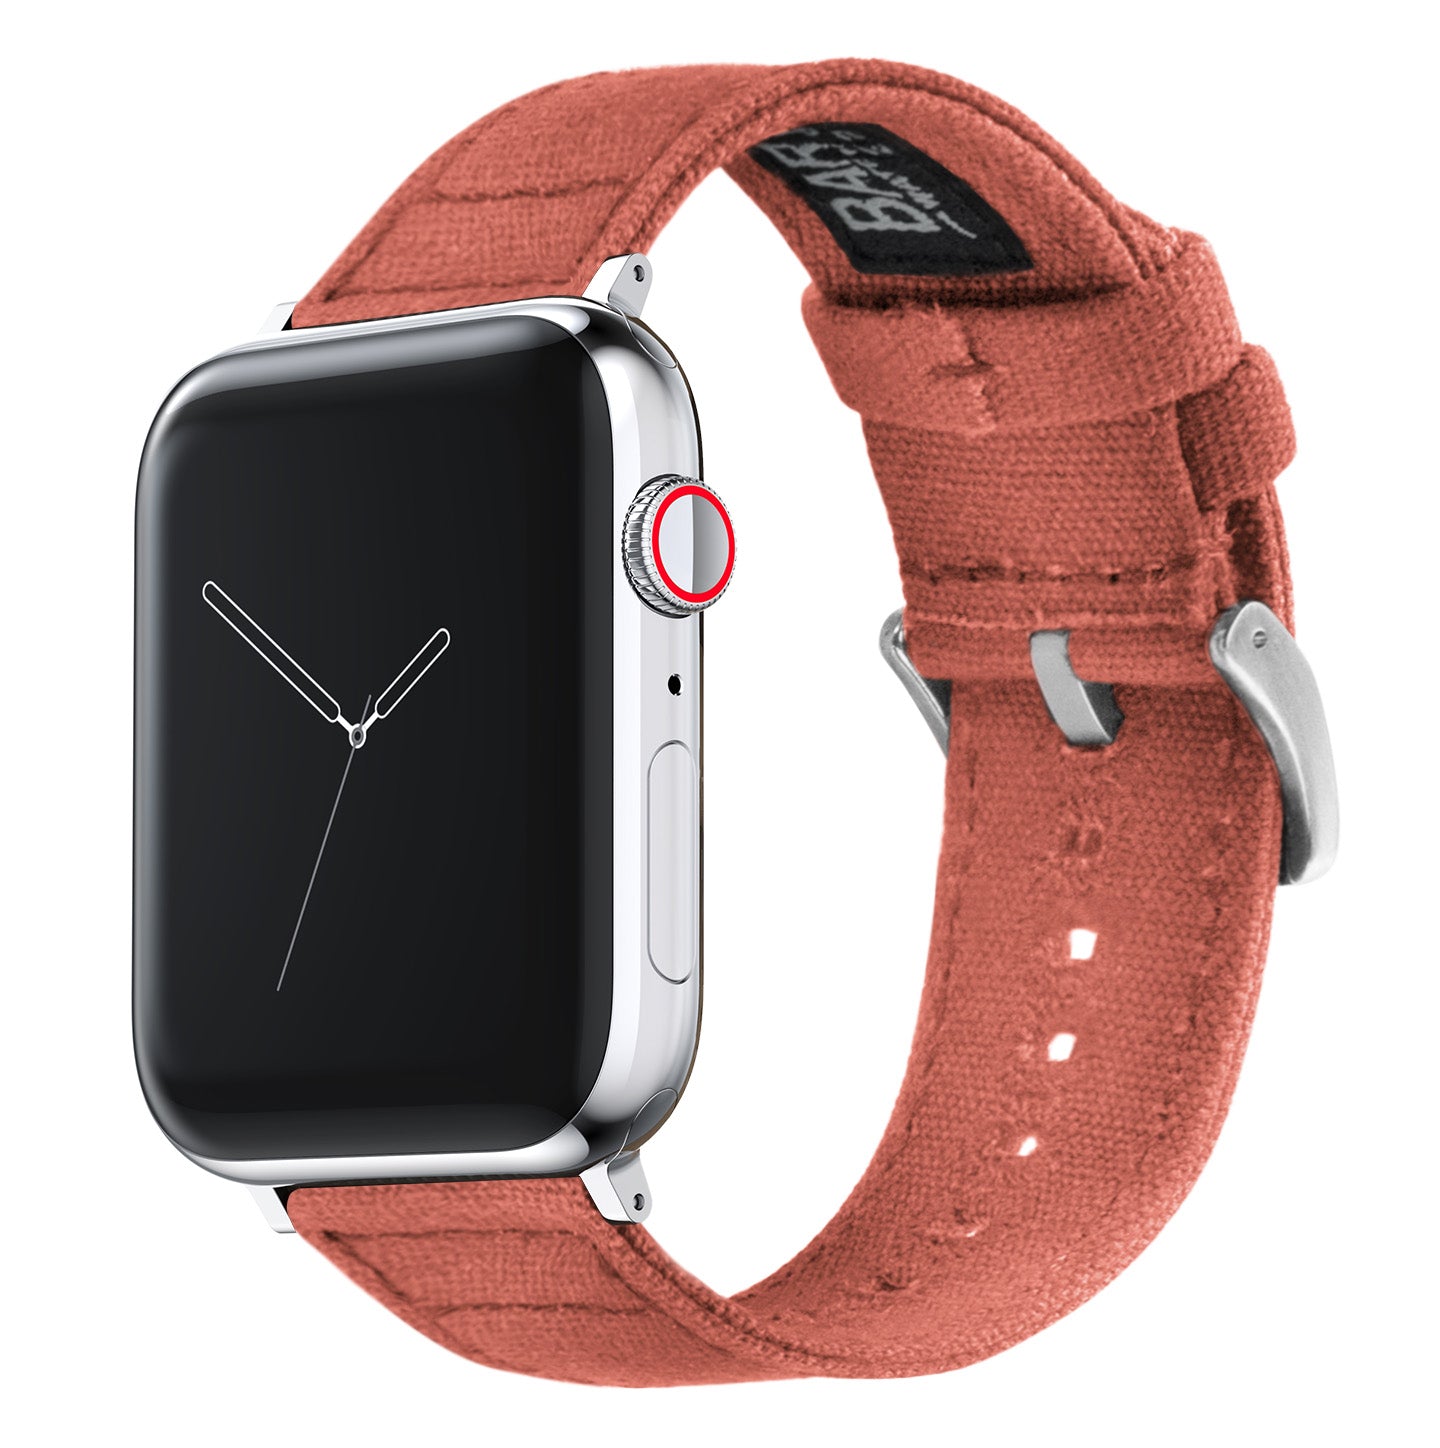 Apple Watch | Autumn Canvas - Barton Watch Bands